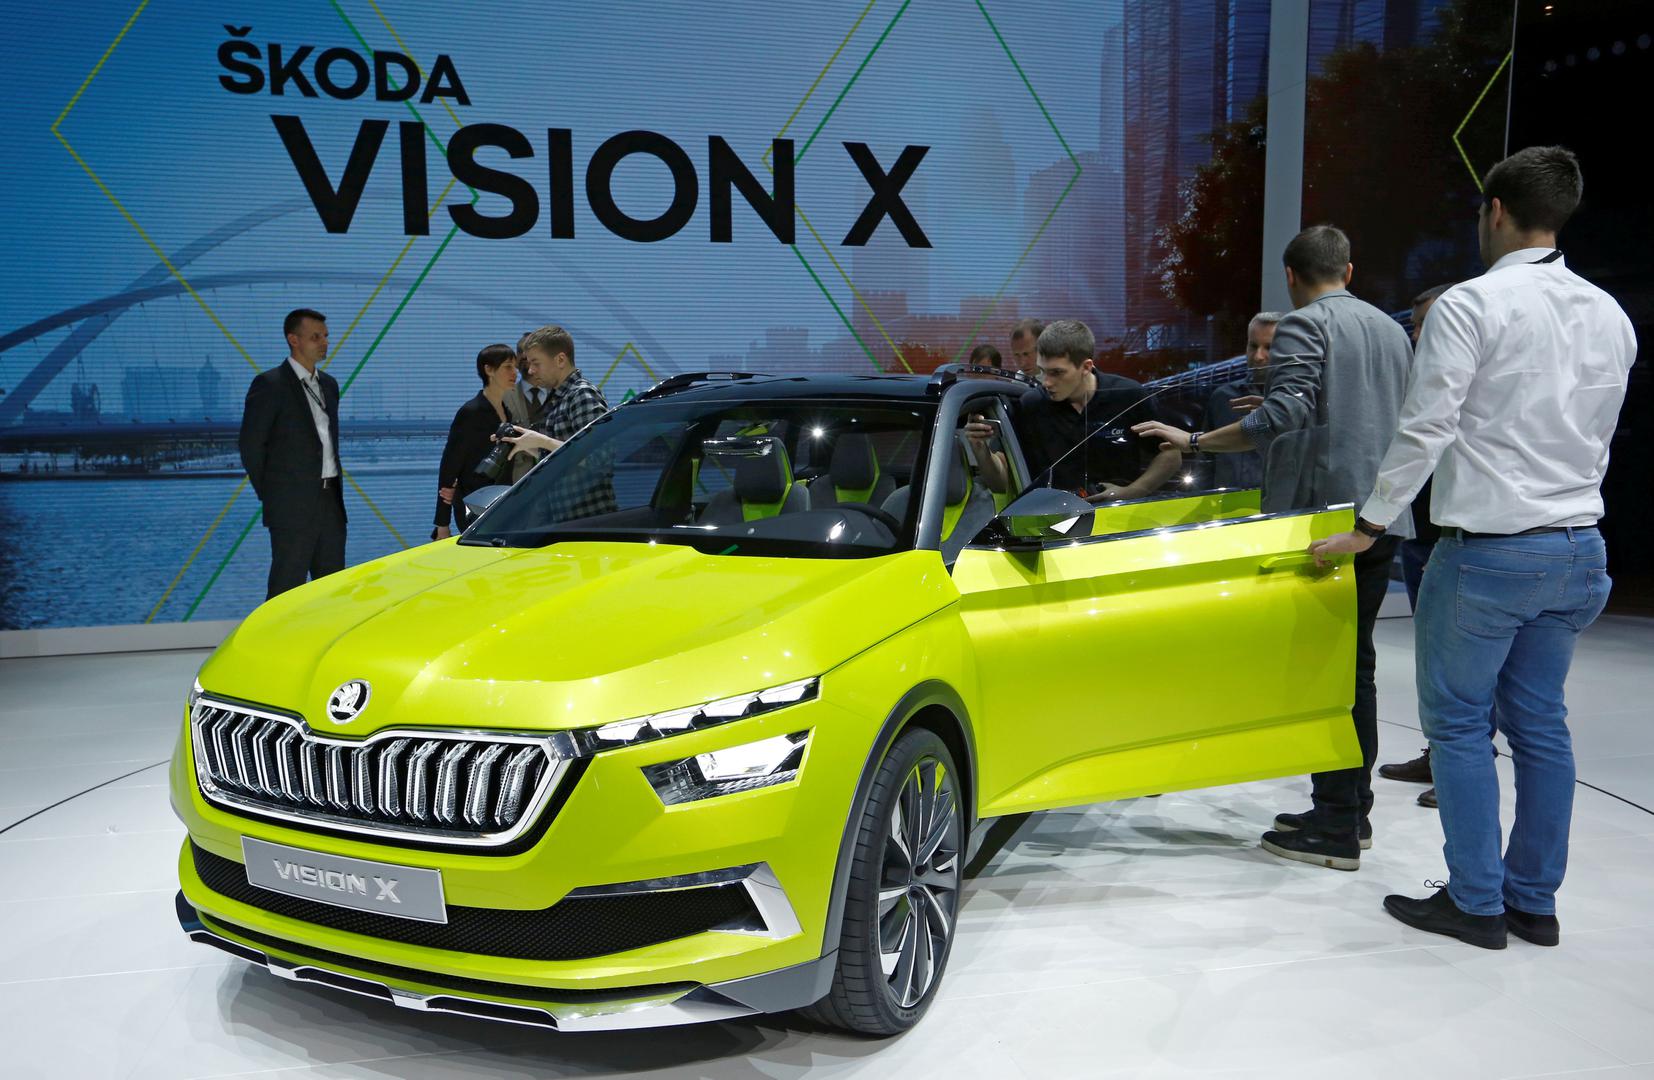 Škoda Vision X urbani je crossover koji vozi na benzin, plin i struju